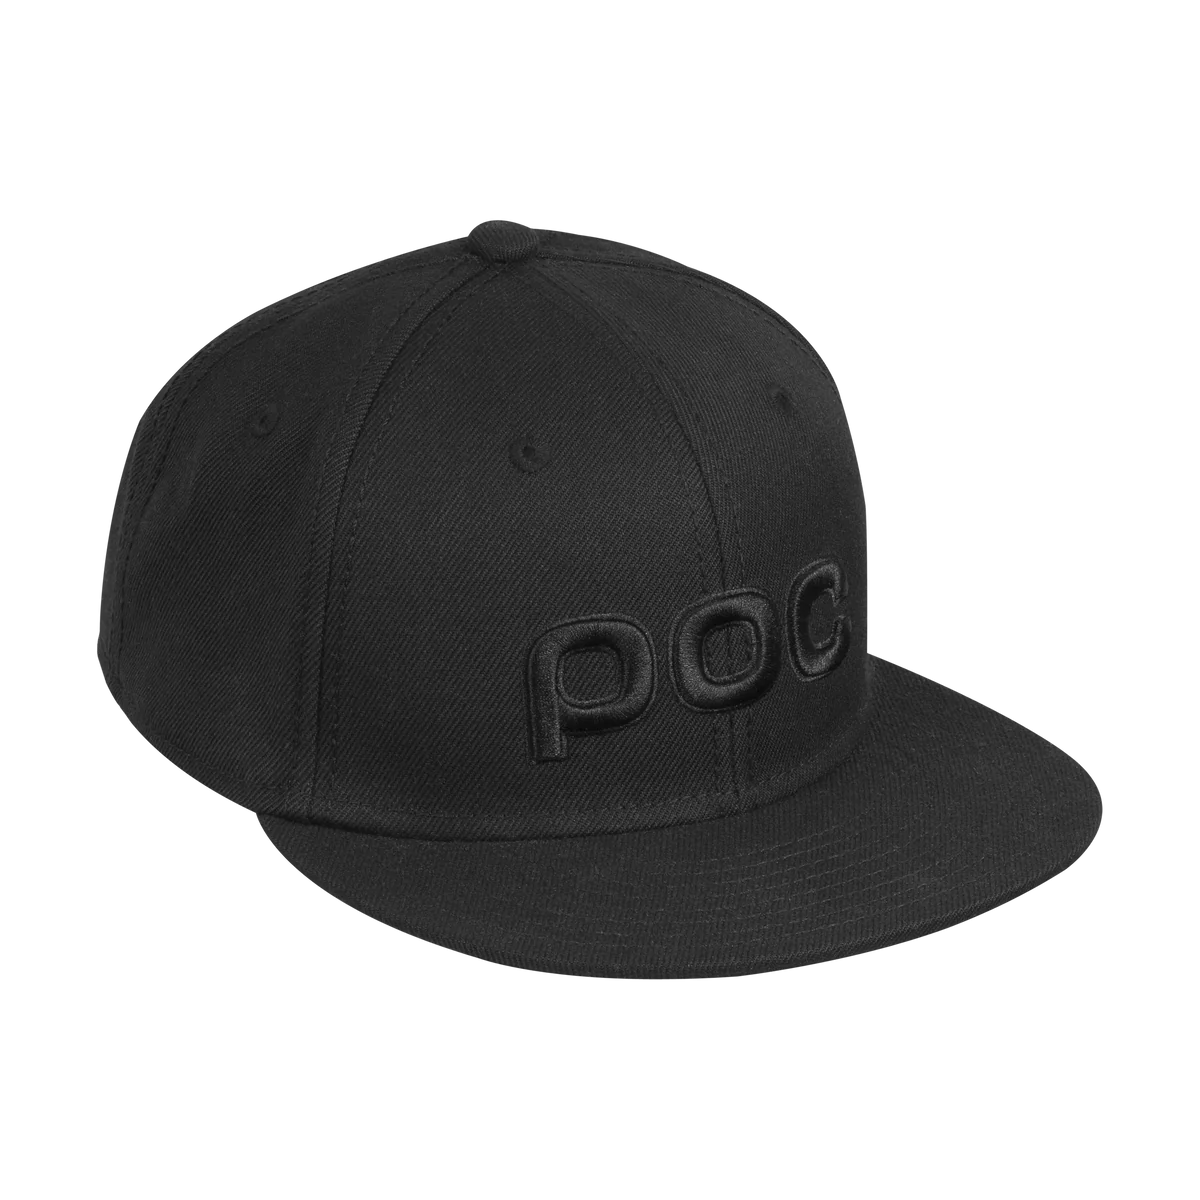 Poc Corp Cap